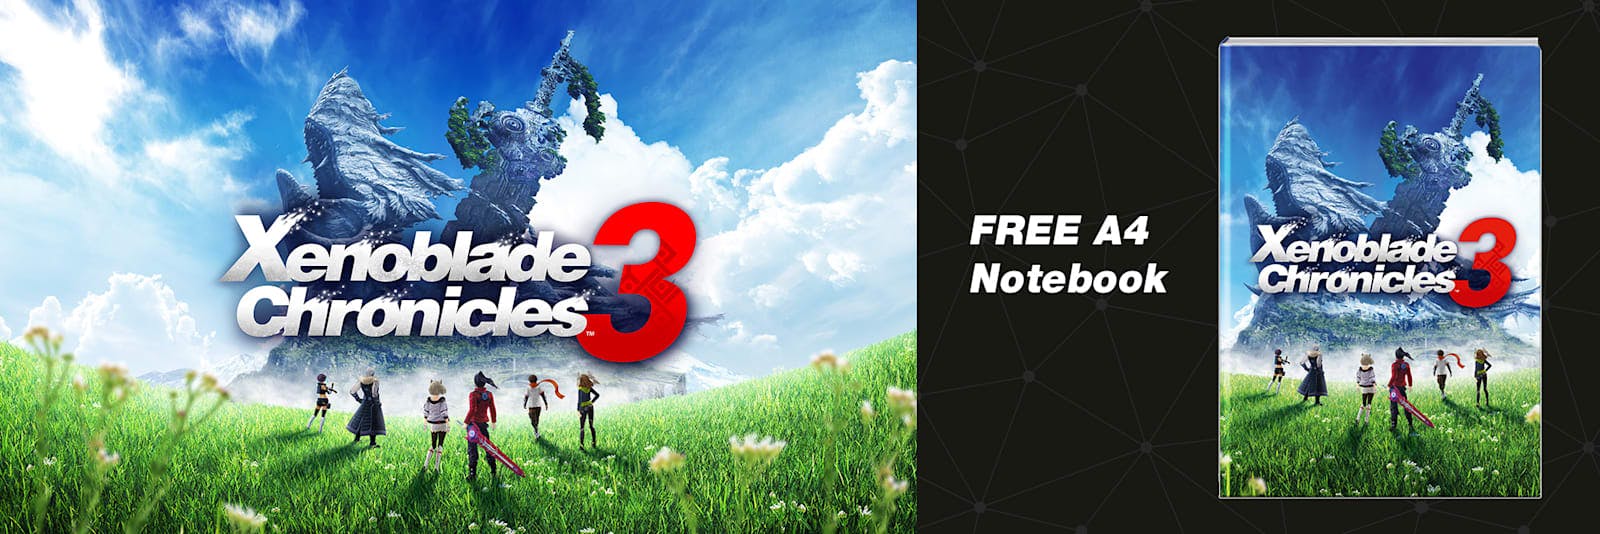 Xenoblade Chronicles 3 - Free A4 Notebook